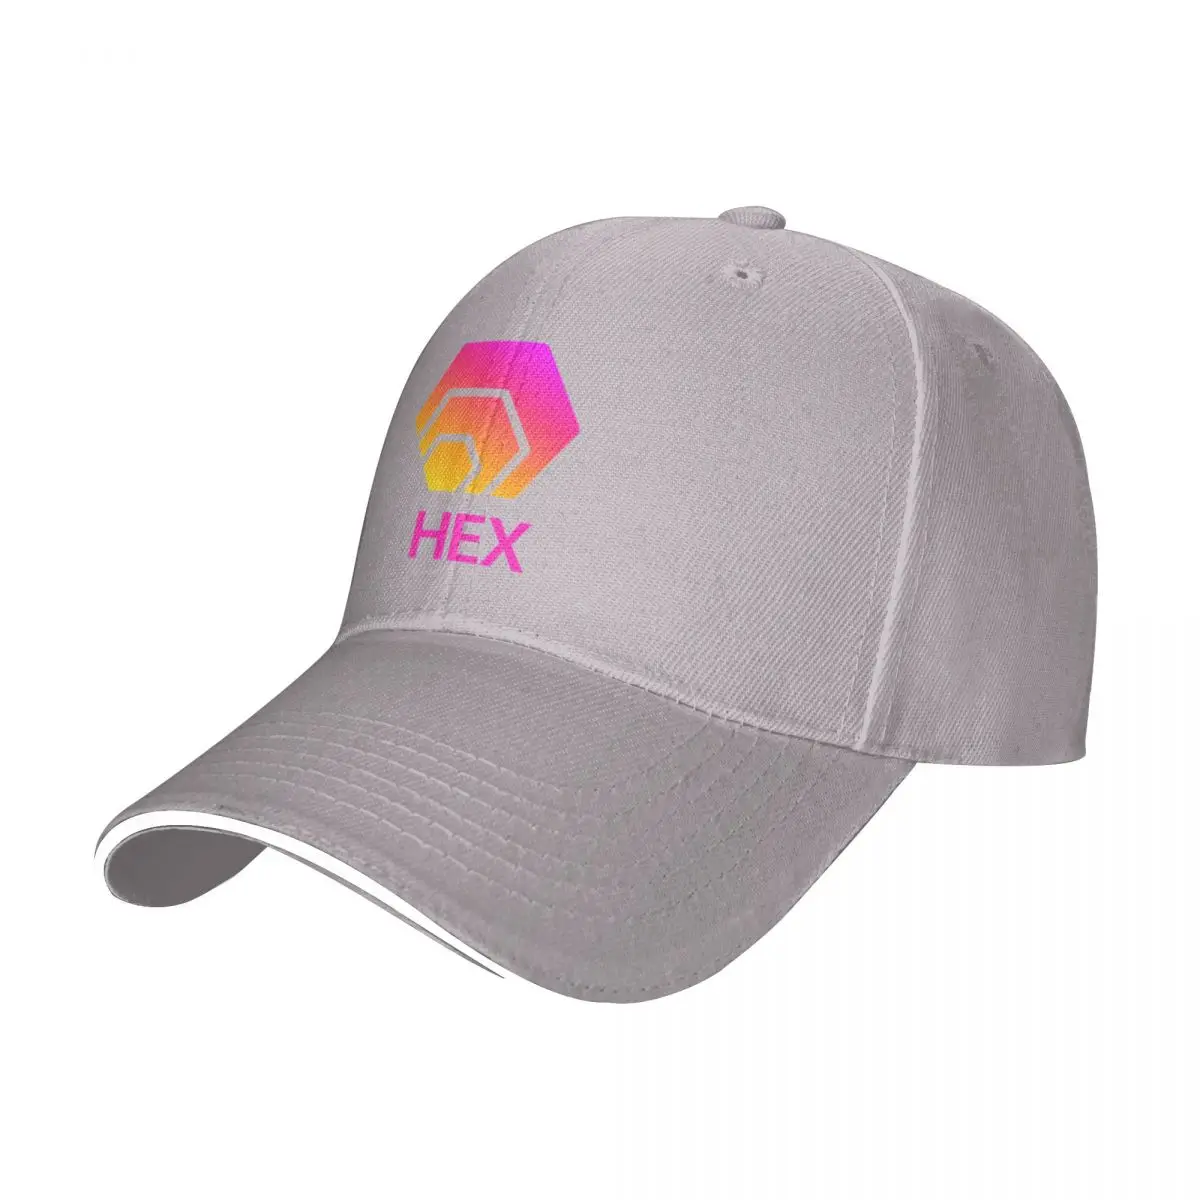 

Best Selling Authentic Hex Design Cap baseball cap baseball hat baseball man caps women cap for women Men's